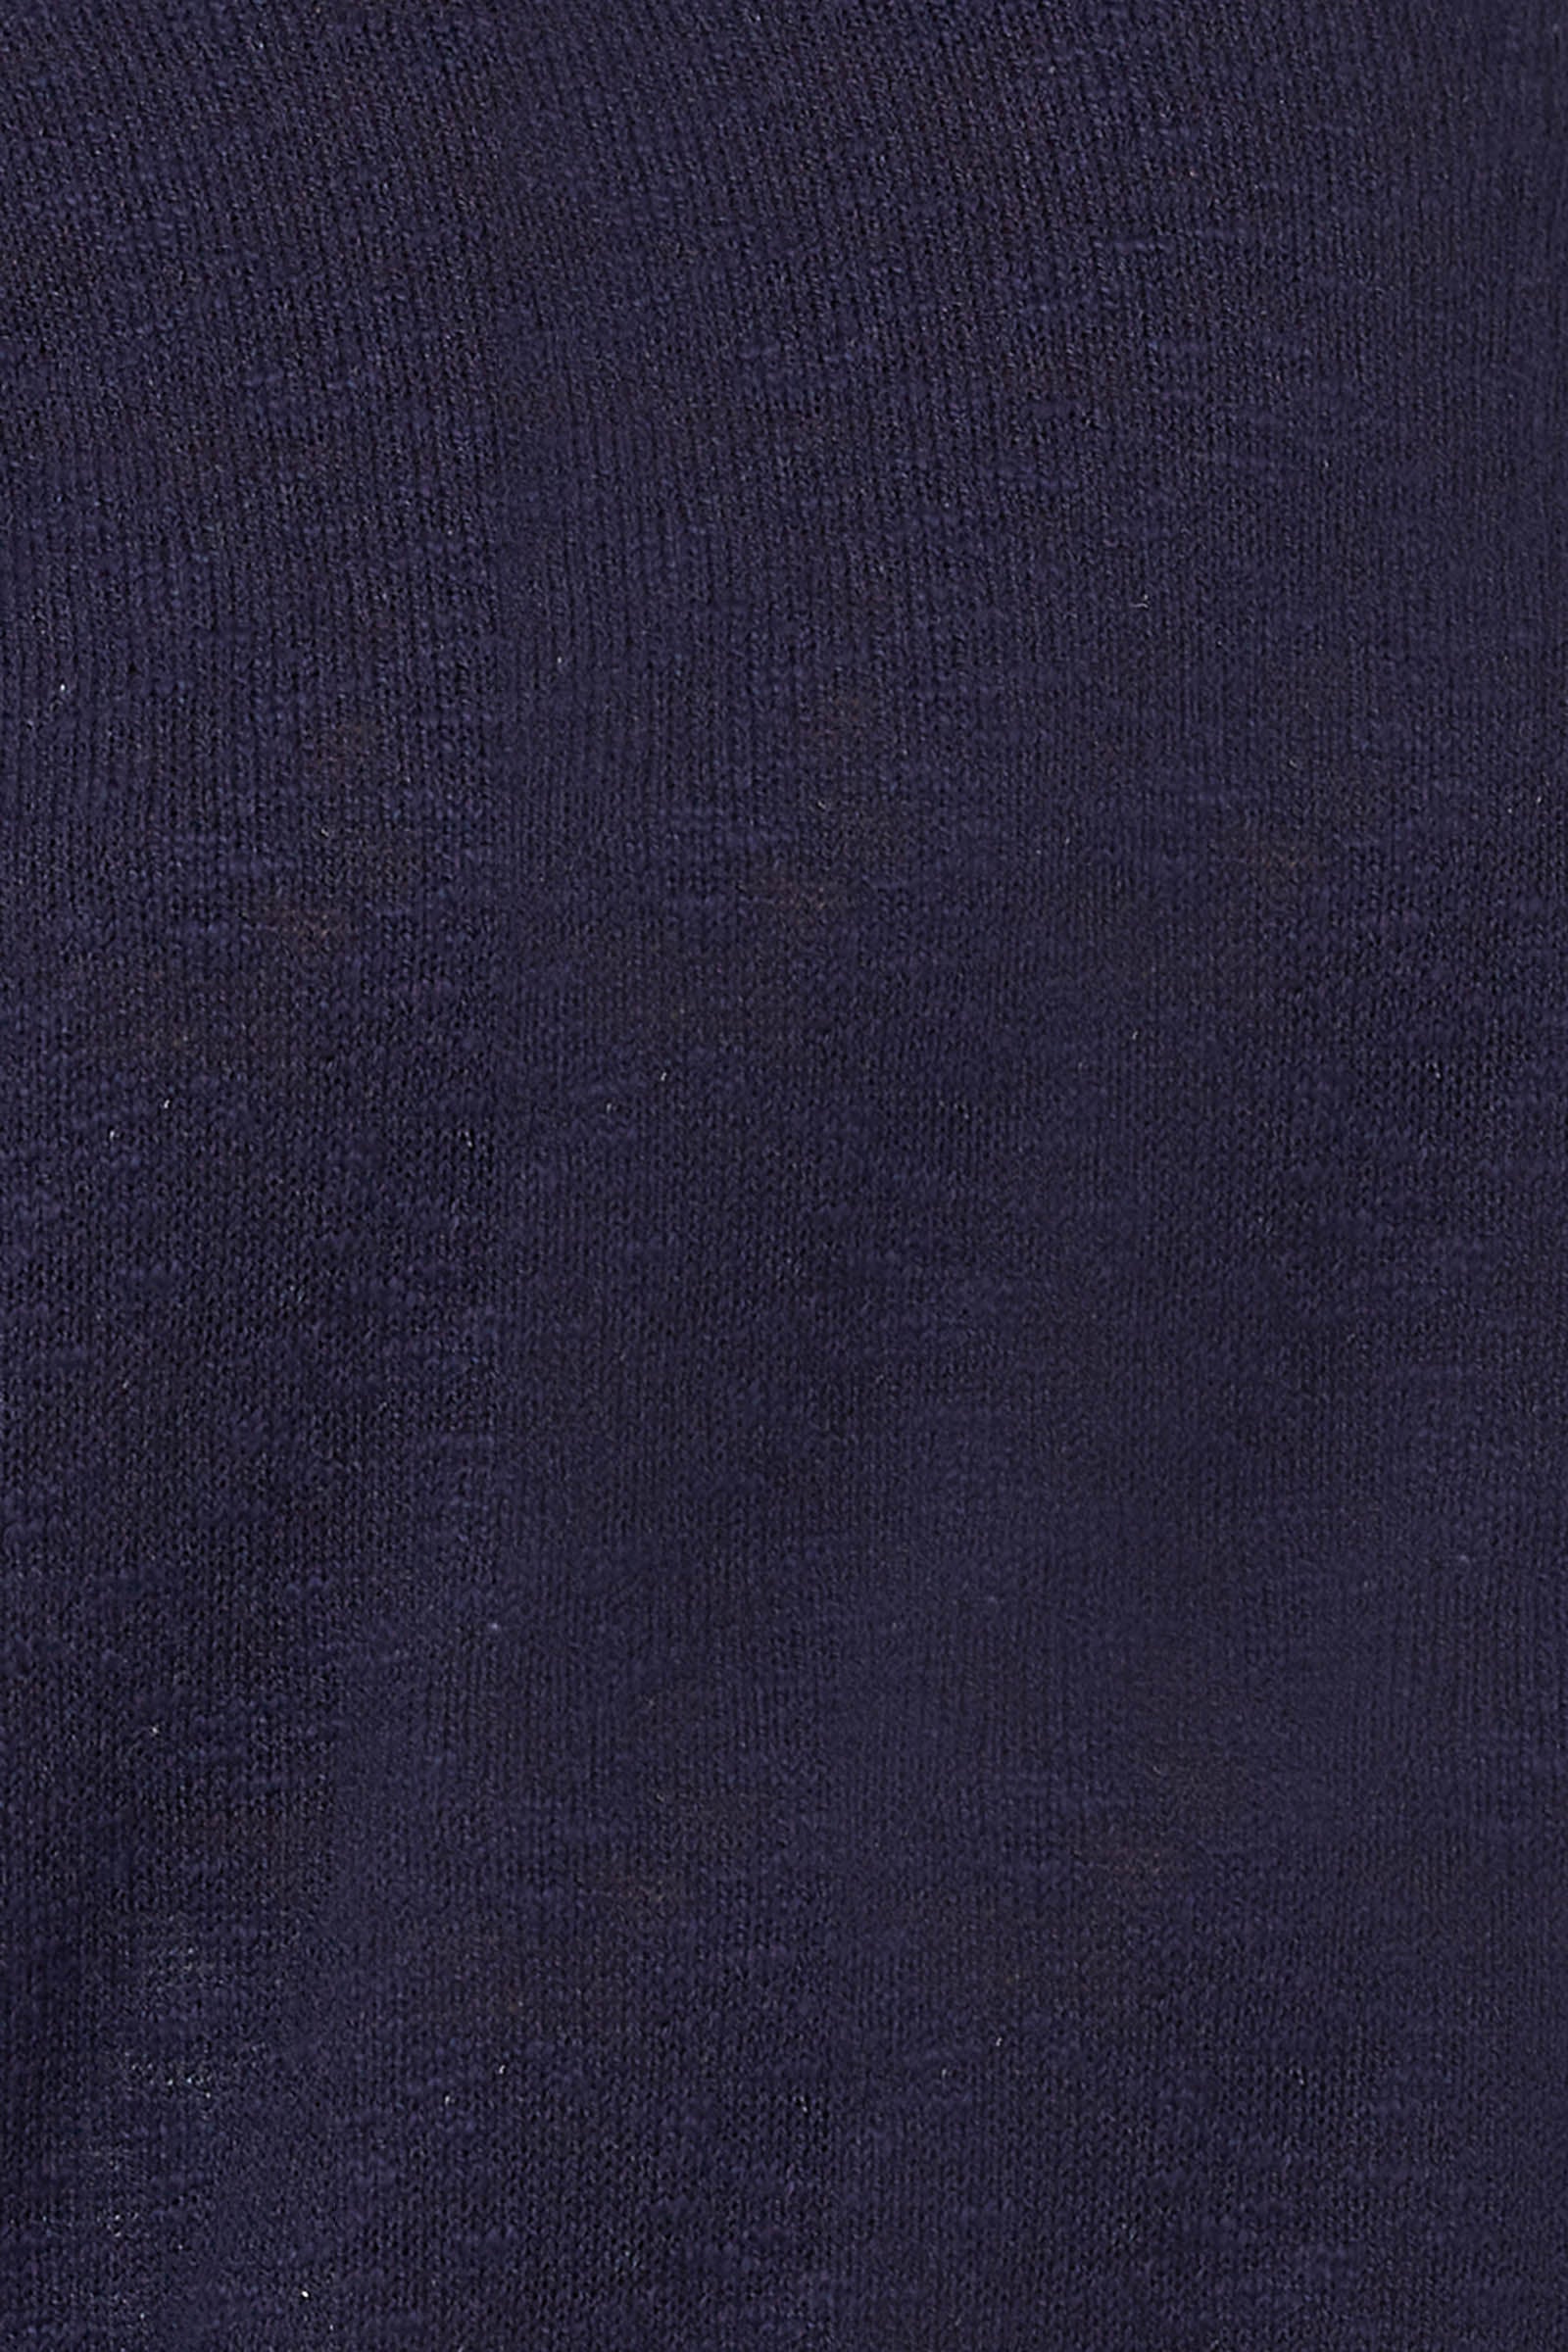 Jovial Jumper - Sapphire - eb&ive Clothing - Knit Jumper